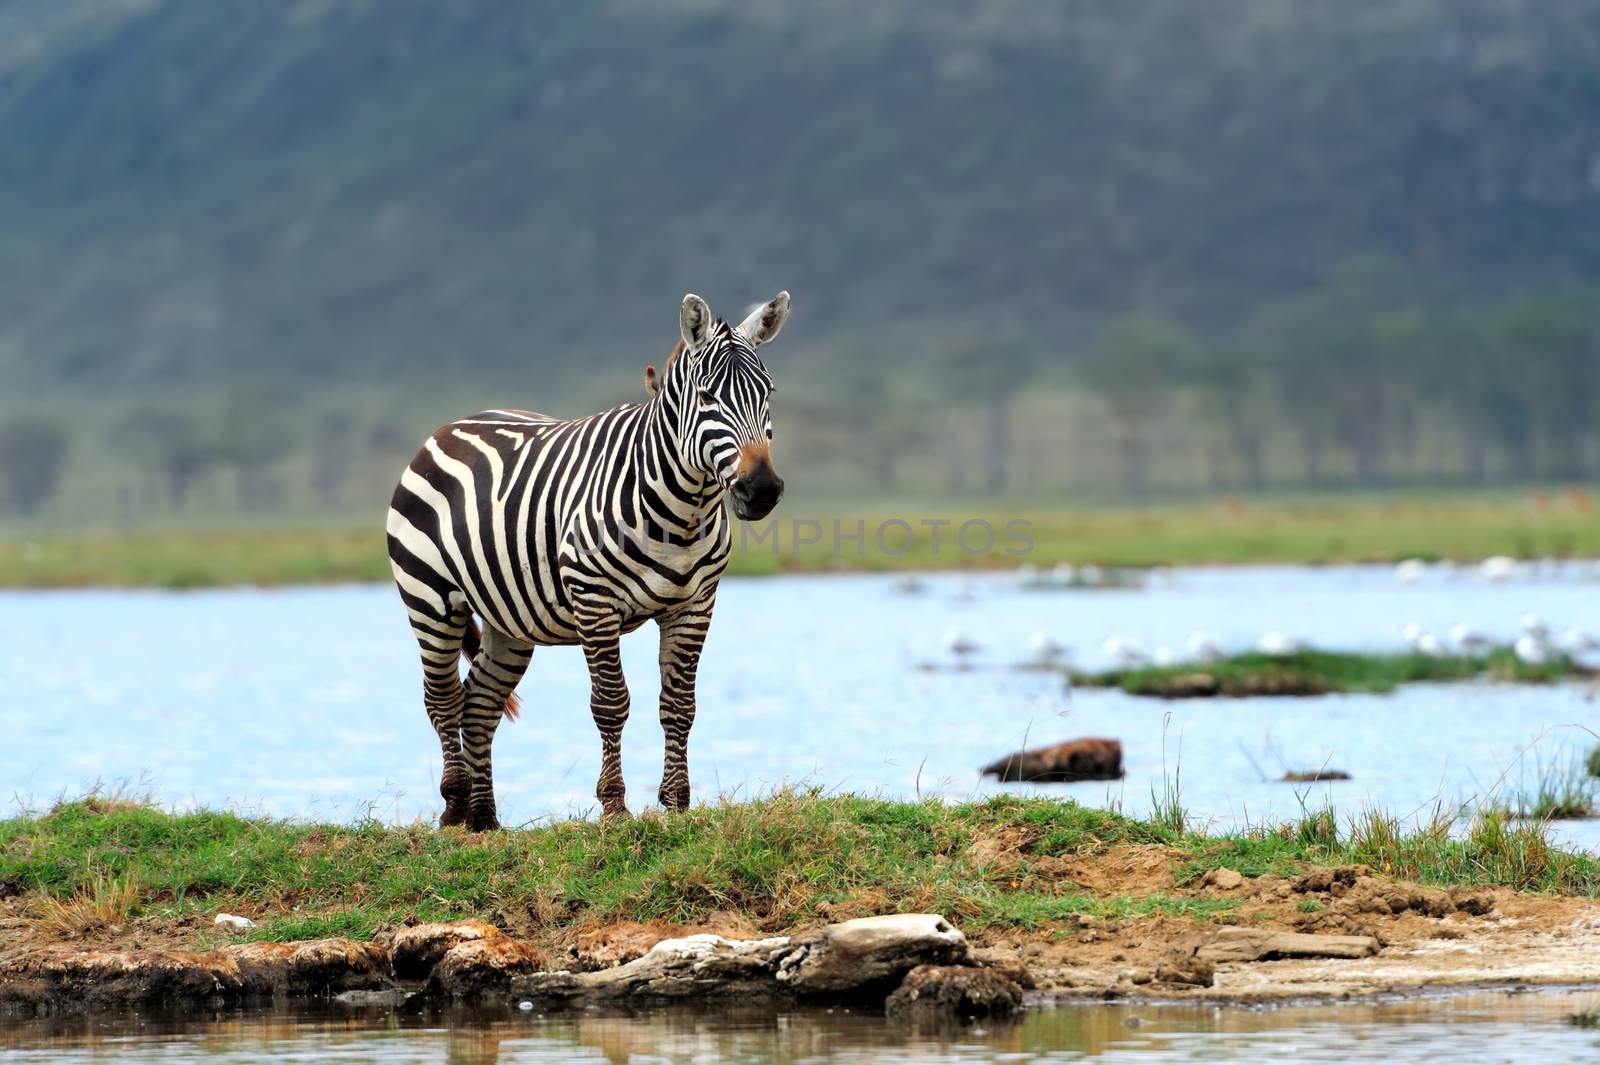 Zebra in the lake of the National Park. Africa, Kenya